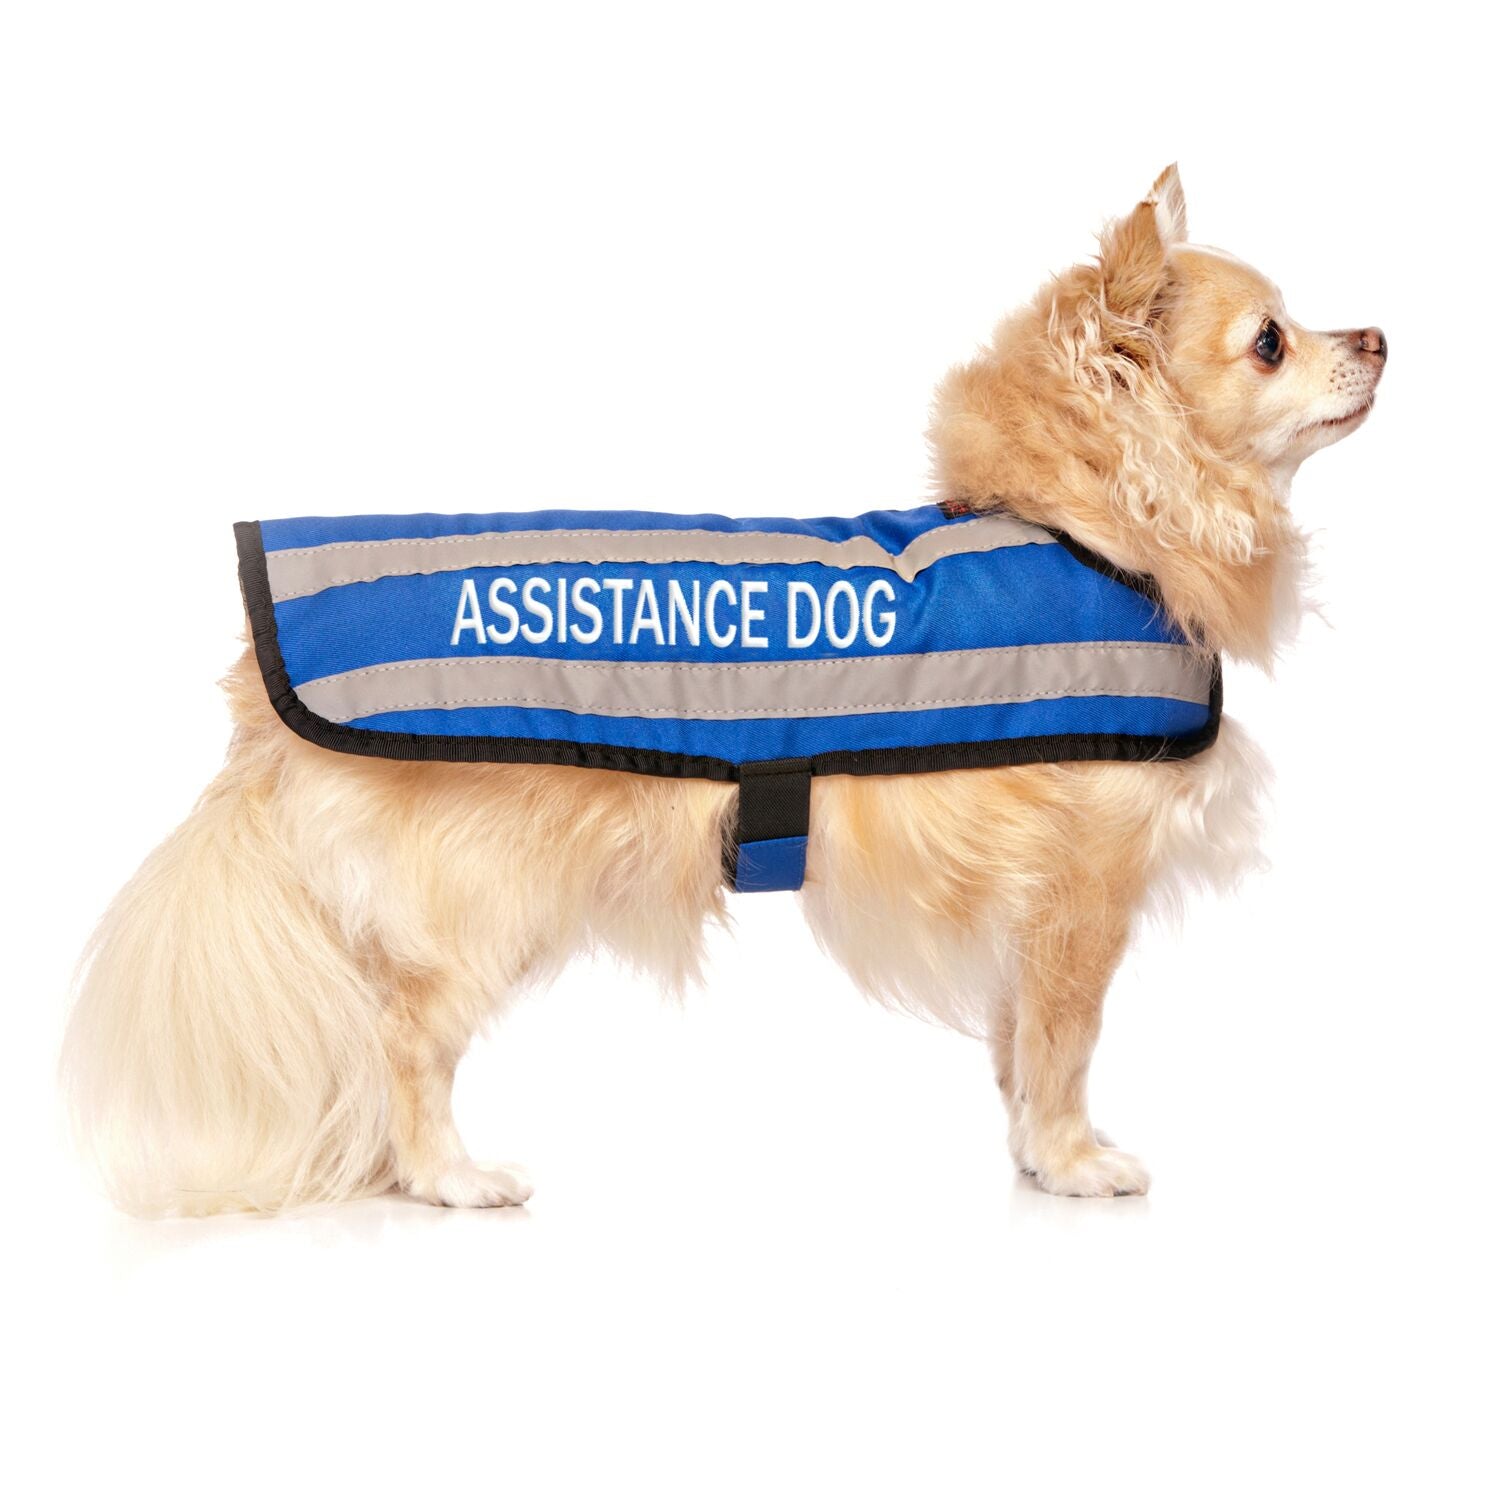 Dexil Friendly Dog Collars ASSISTANCE DOG S/M Reflective Coat